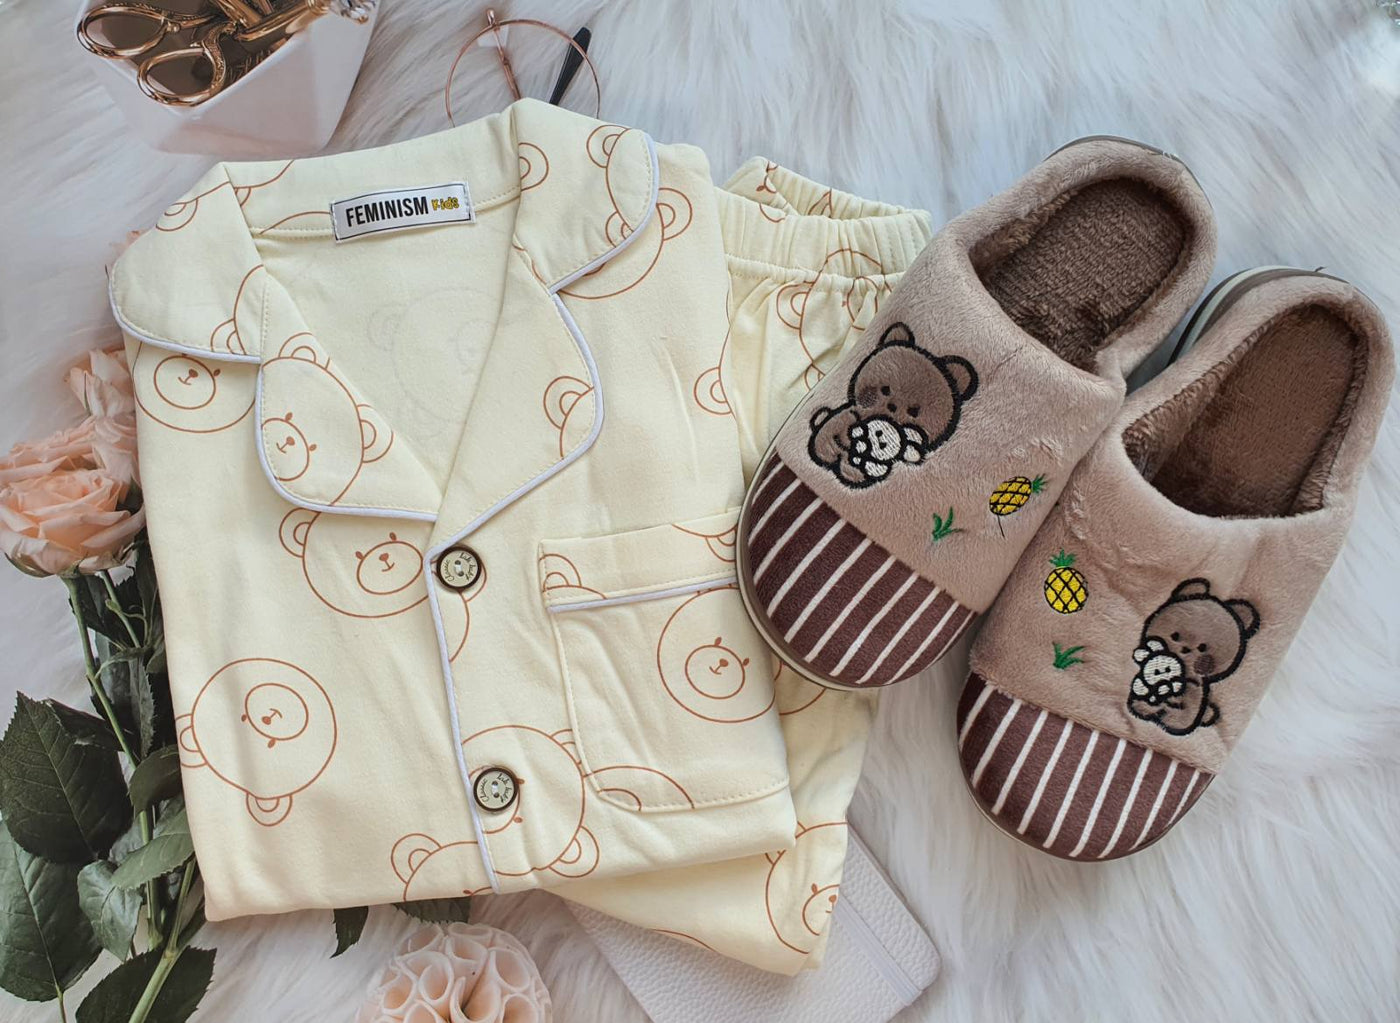 Brown Bear Kid's Pajama set